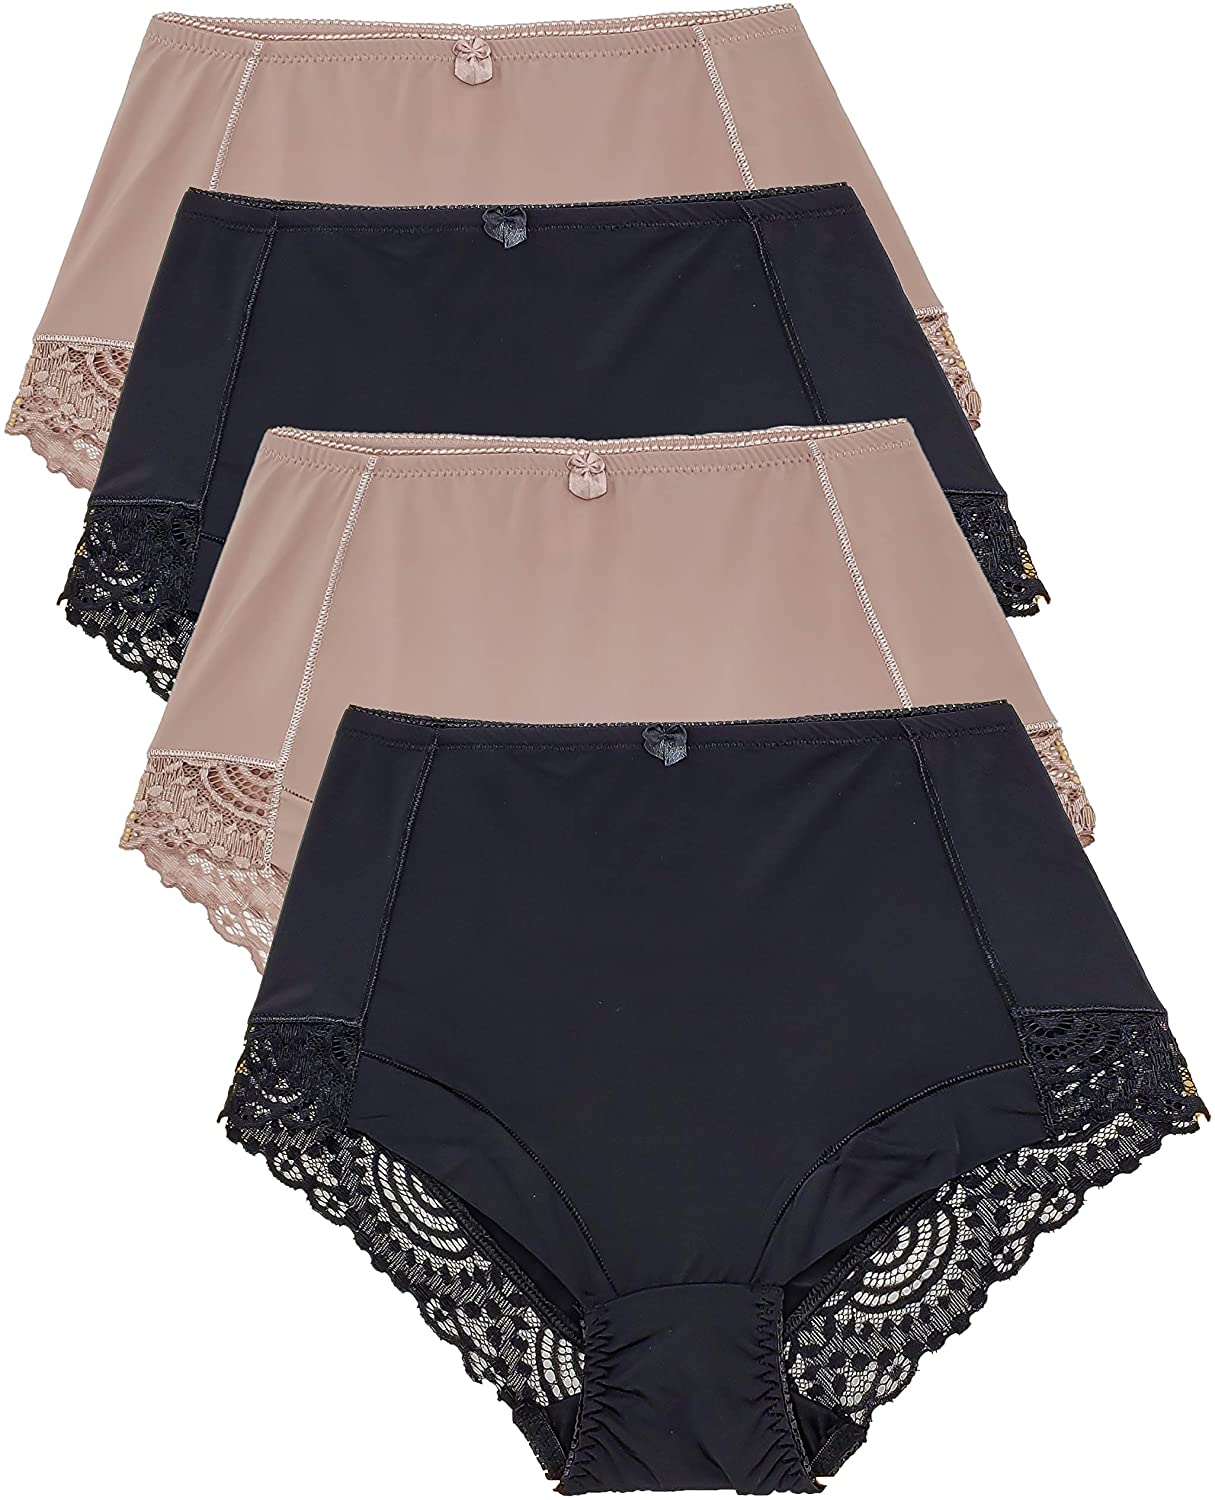 Barbra Women's Multi-Pack High Waist Cool Feel Brief Underwear